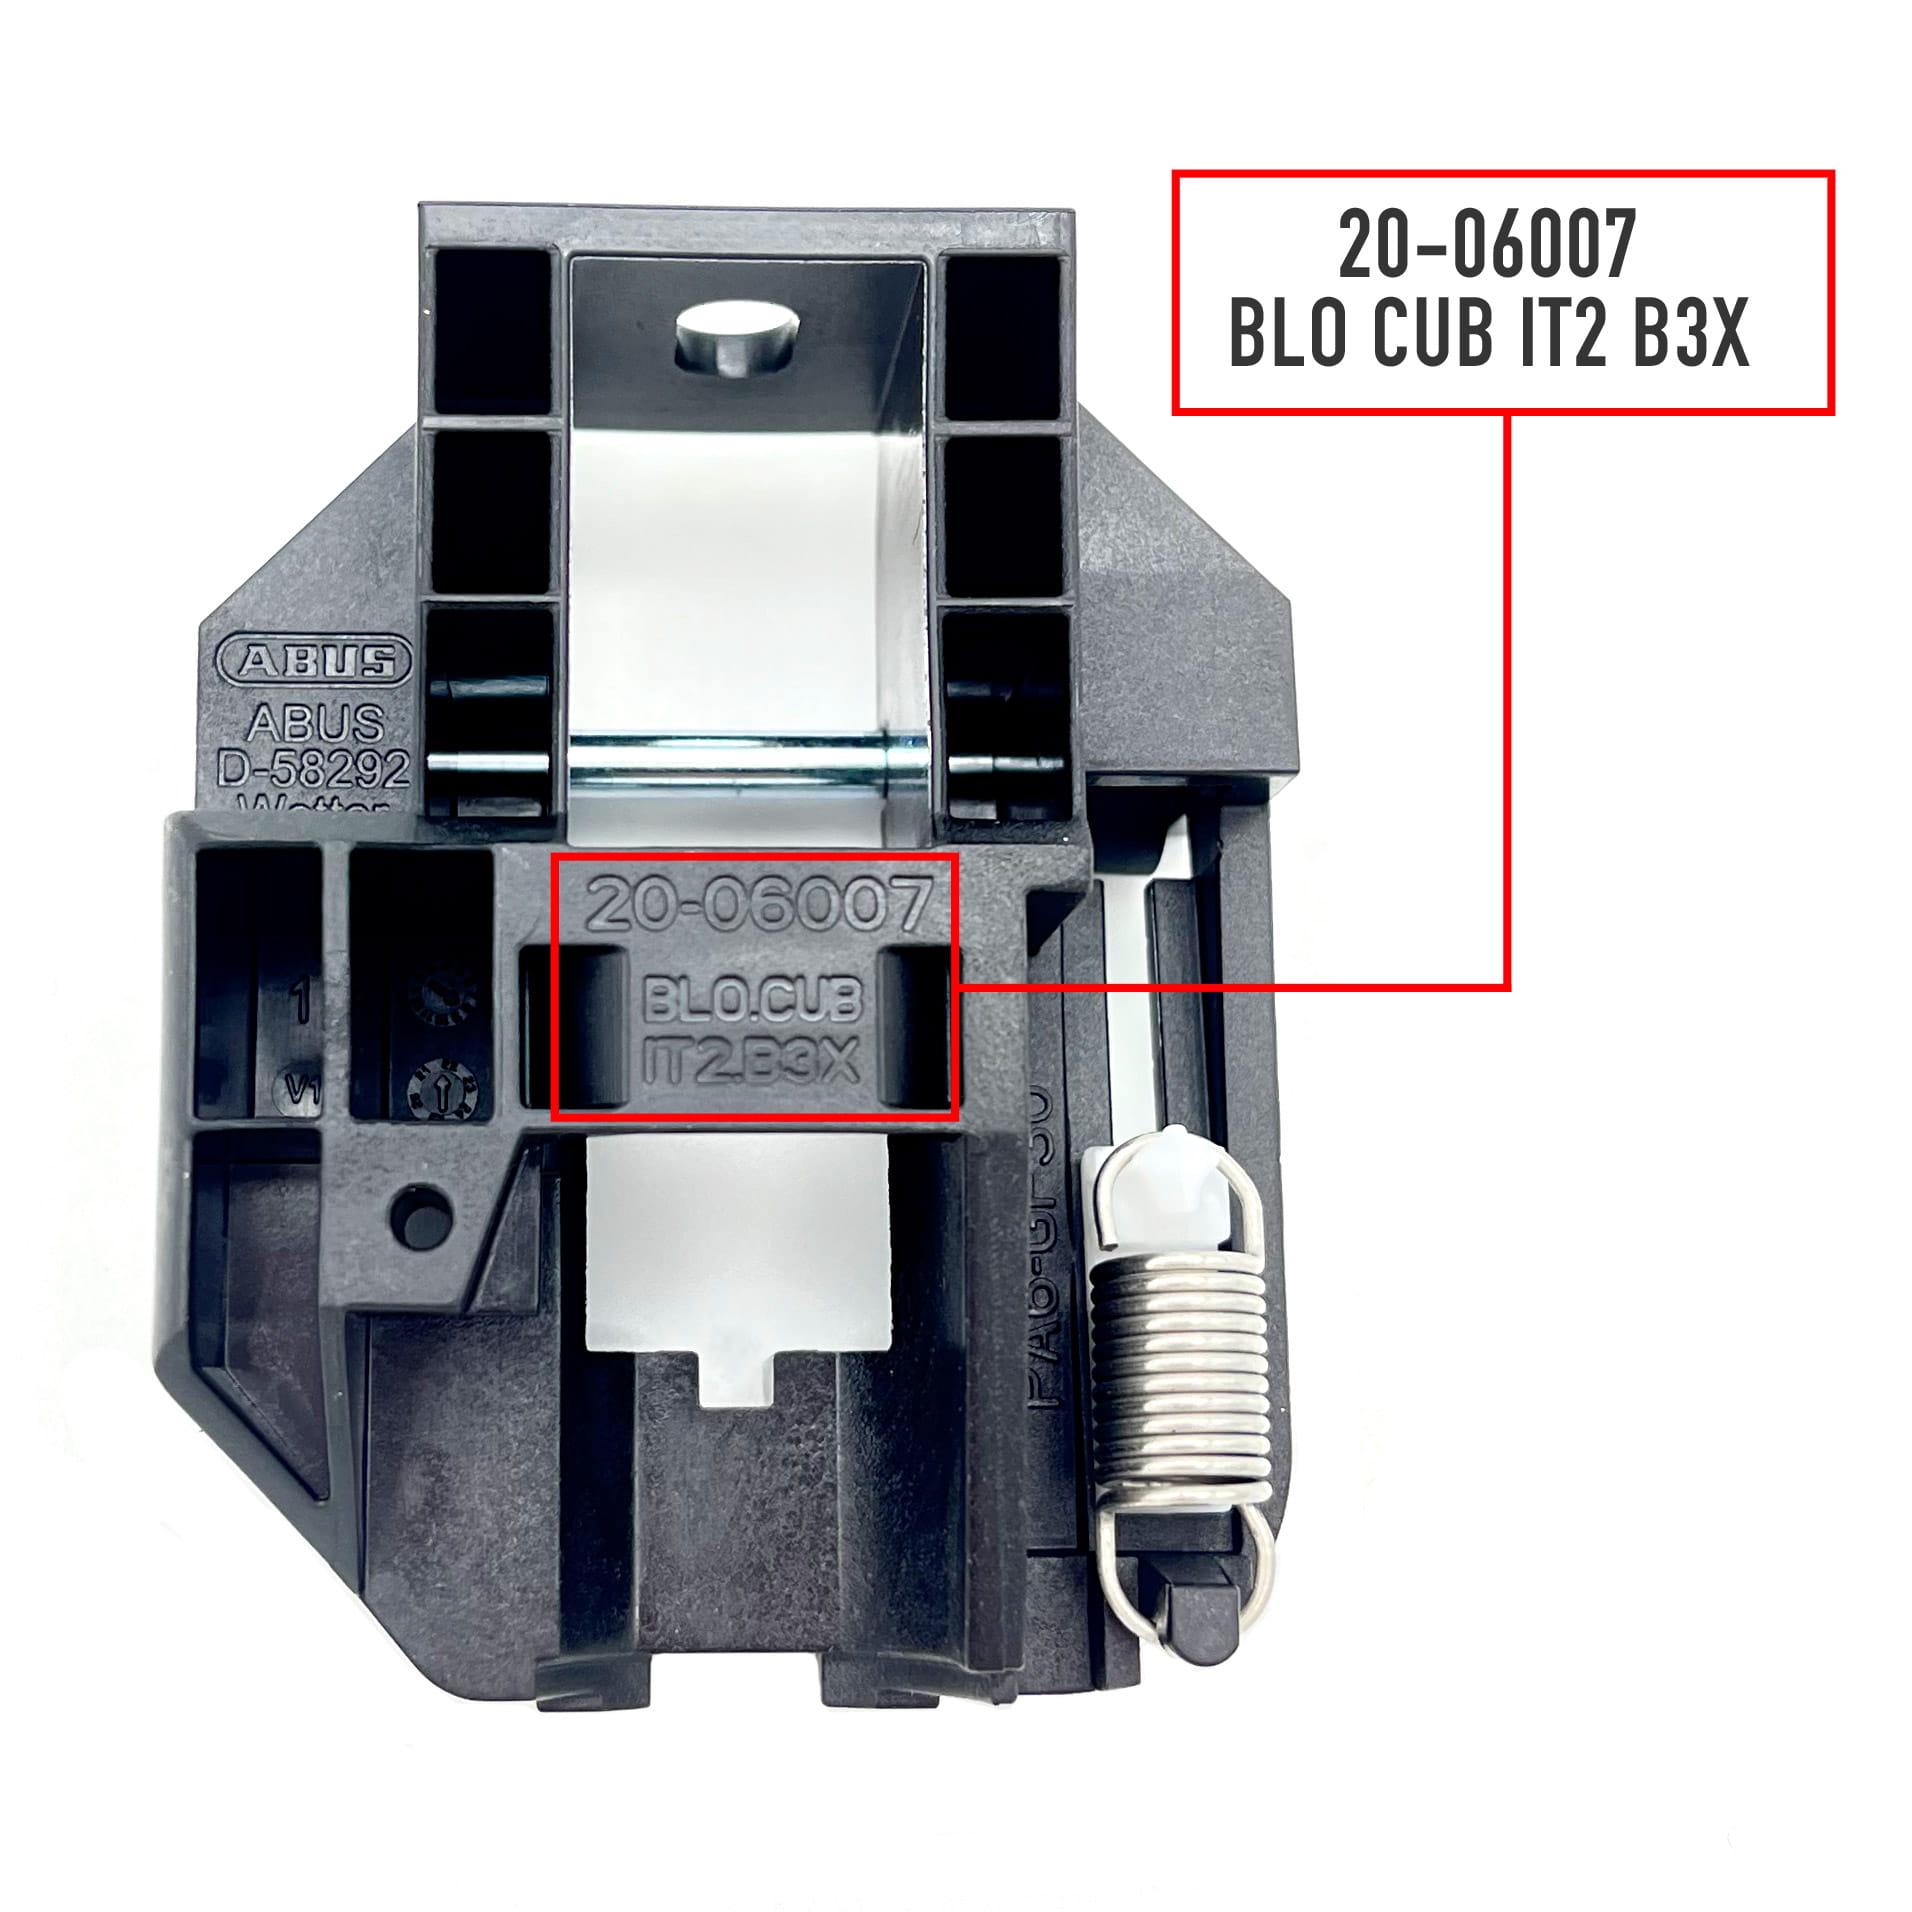 ABUS Cube Battery Mount BLO CUB IT2.B3X Bracket 20-06007